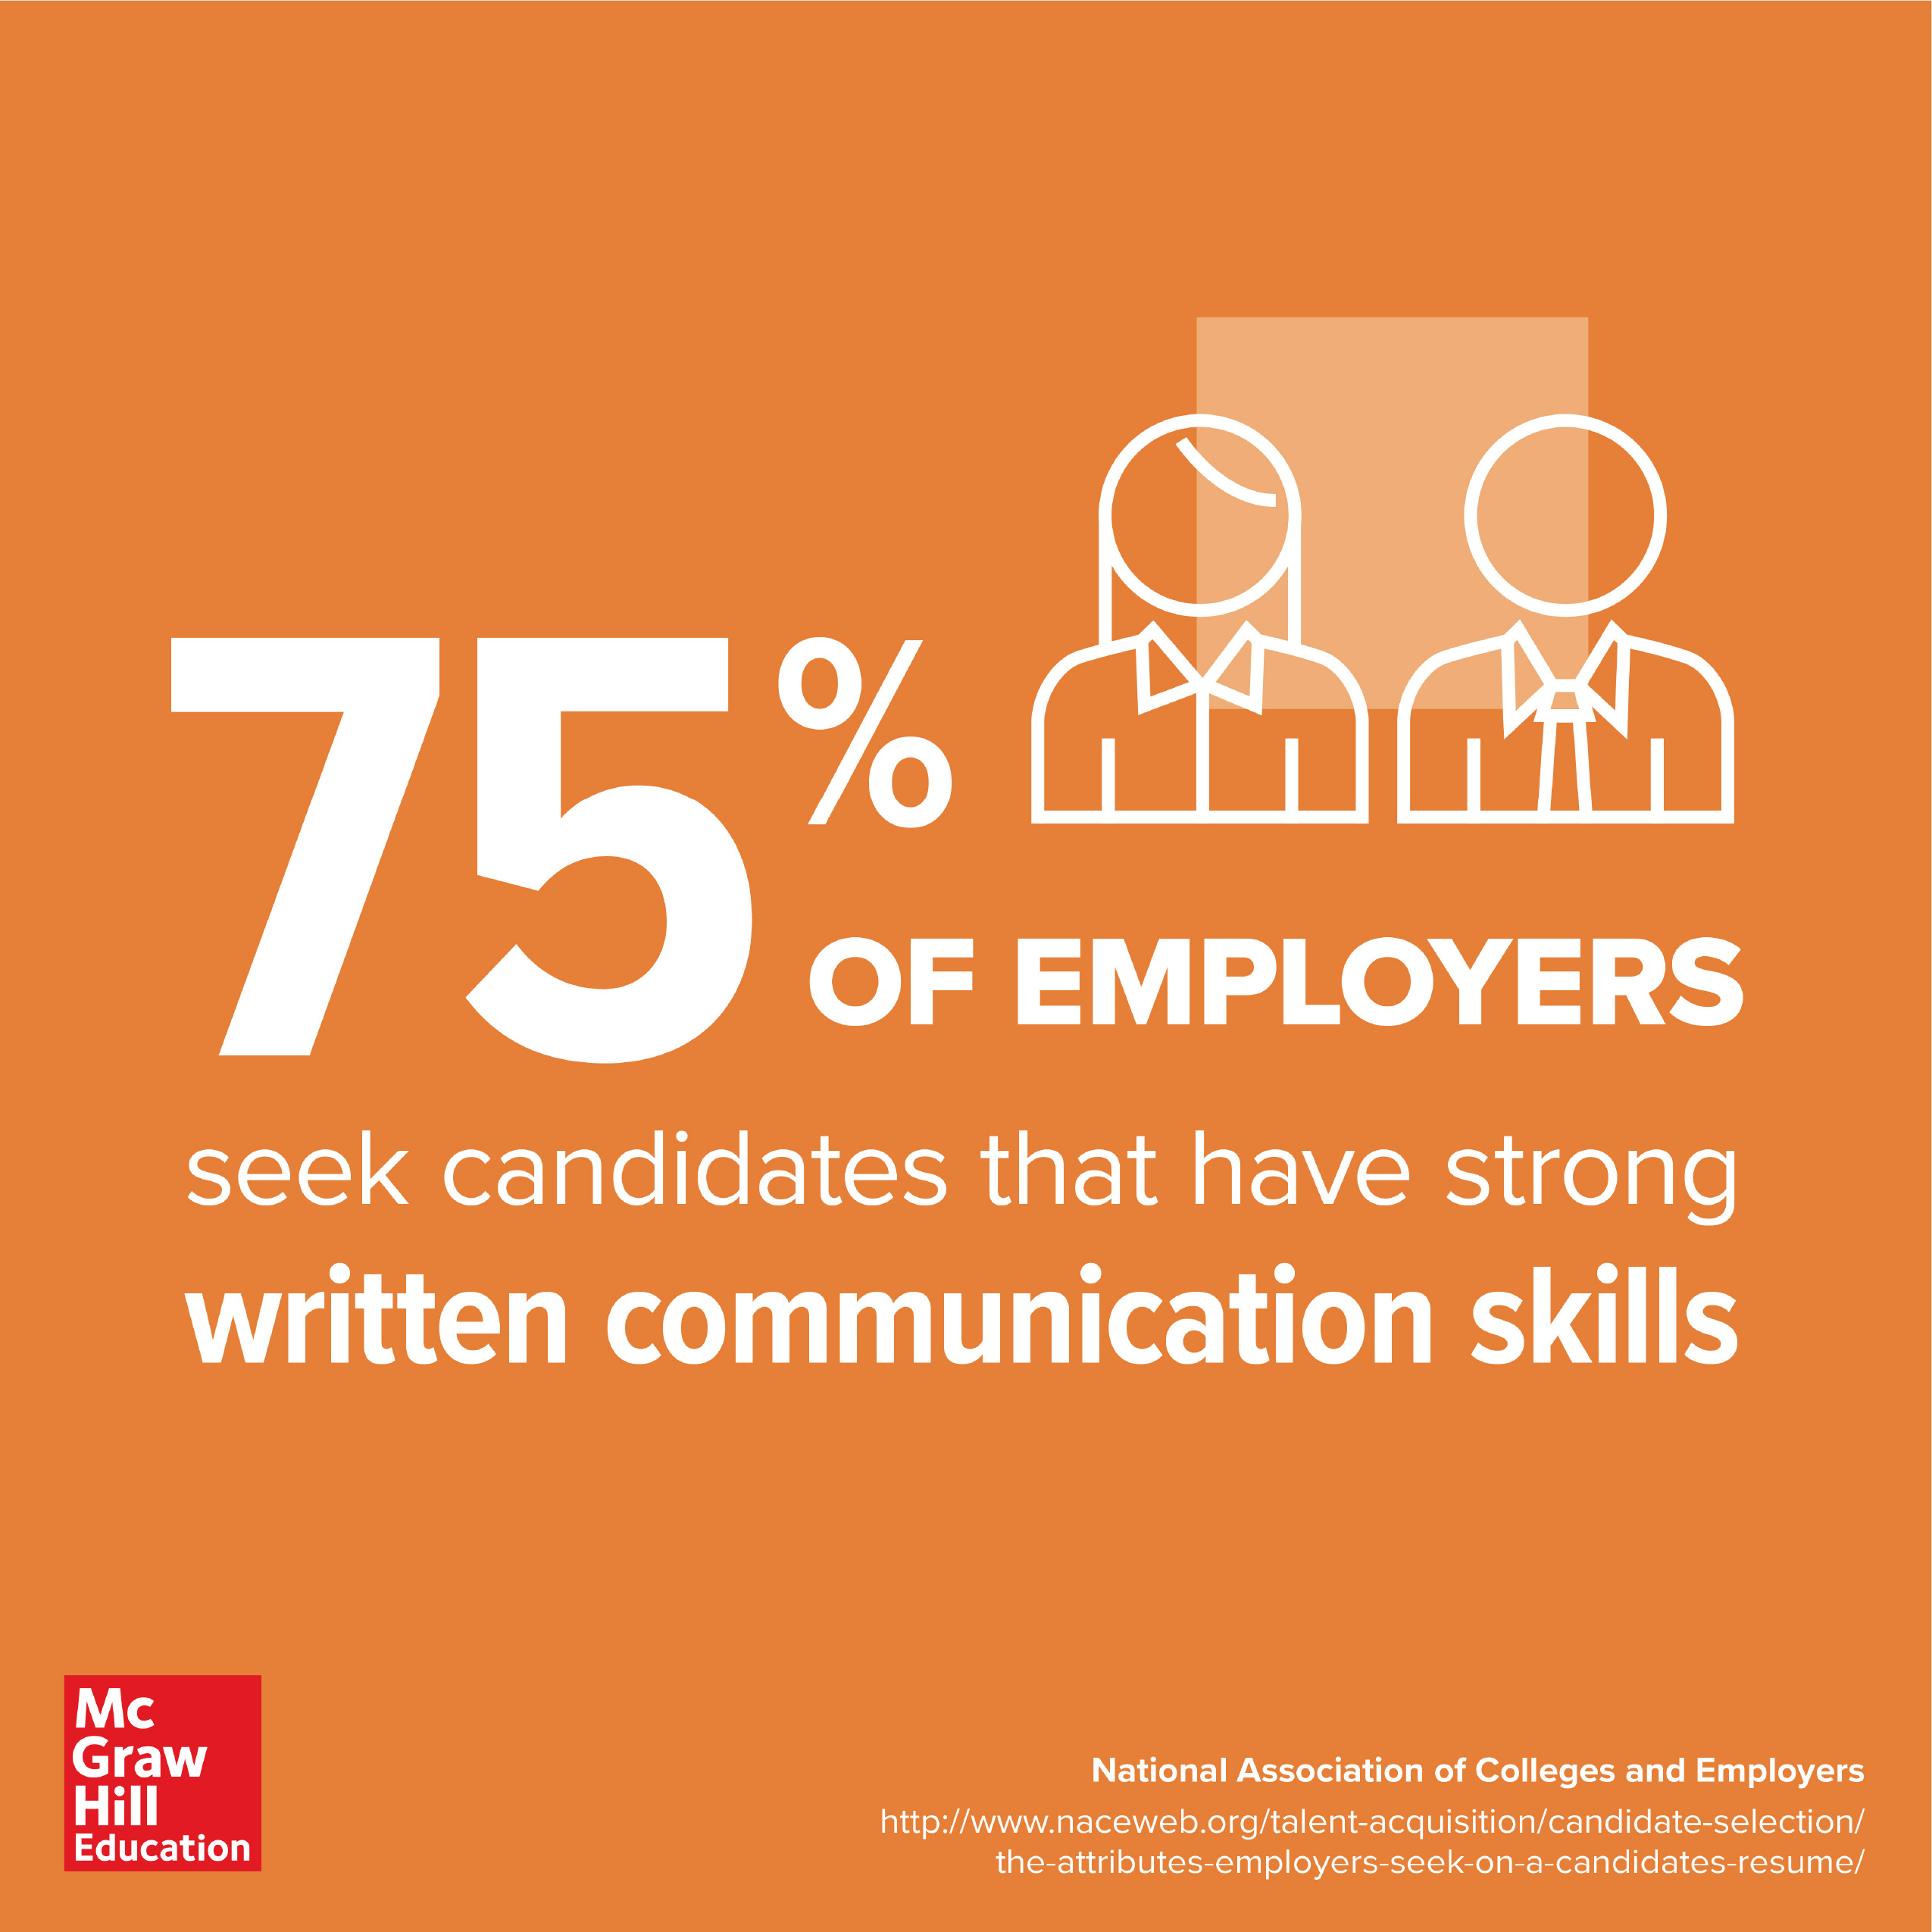 Employers seek strong written communication skills